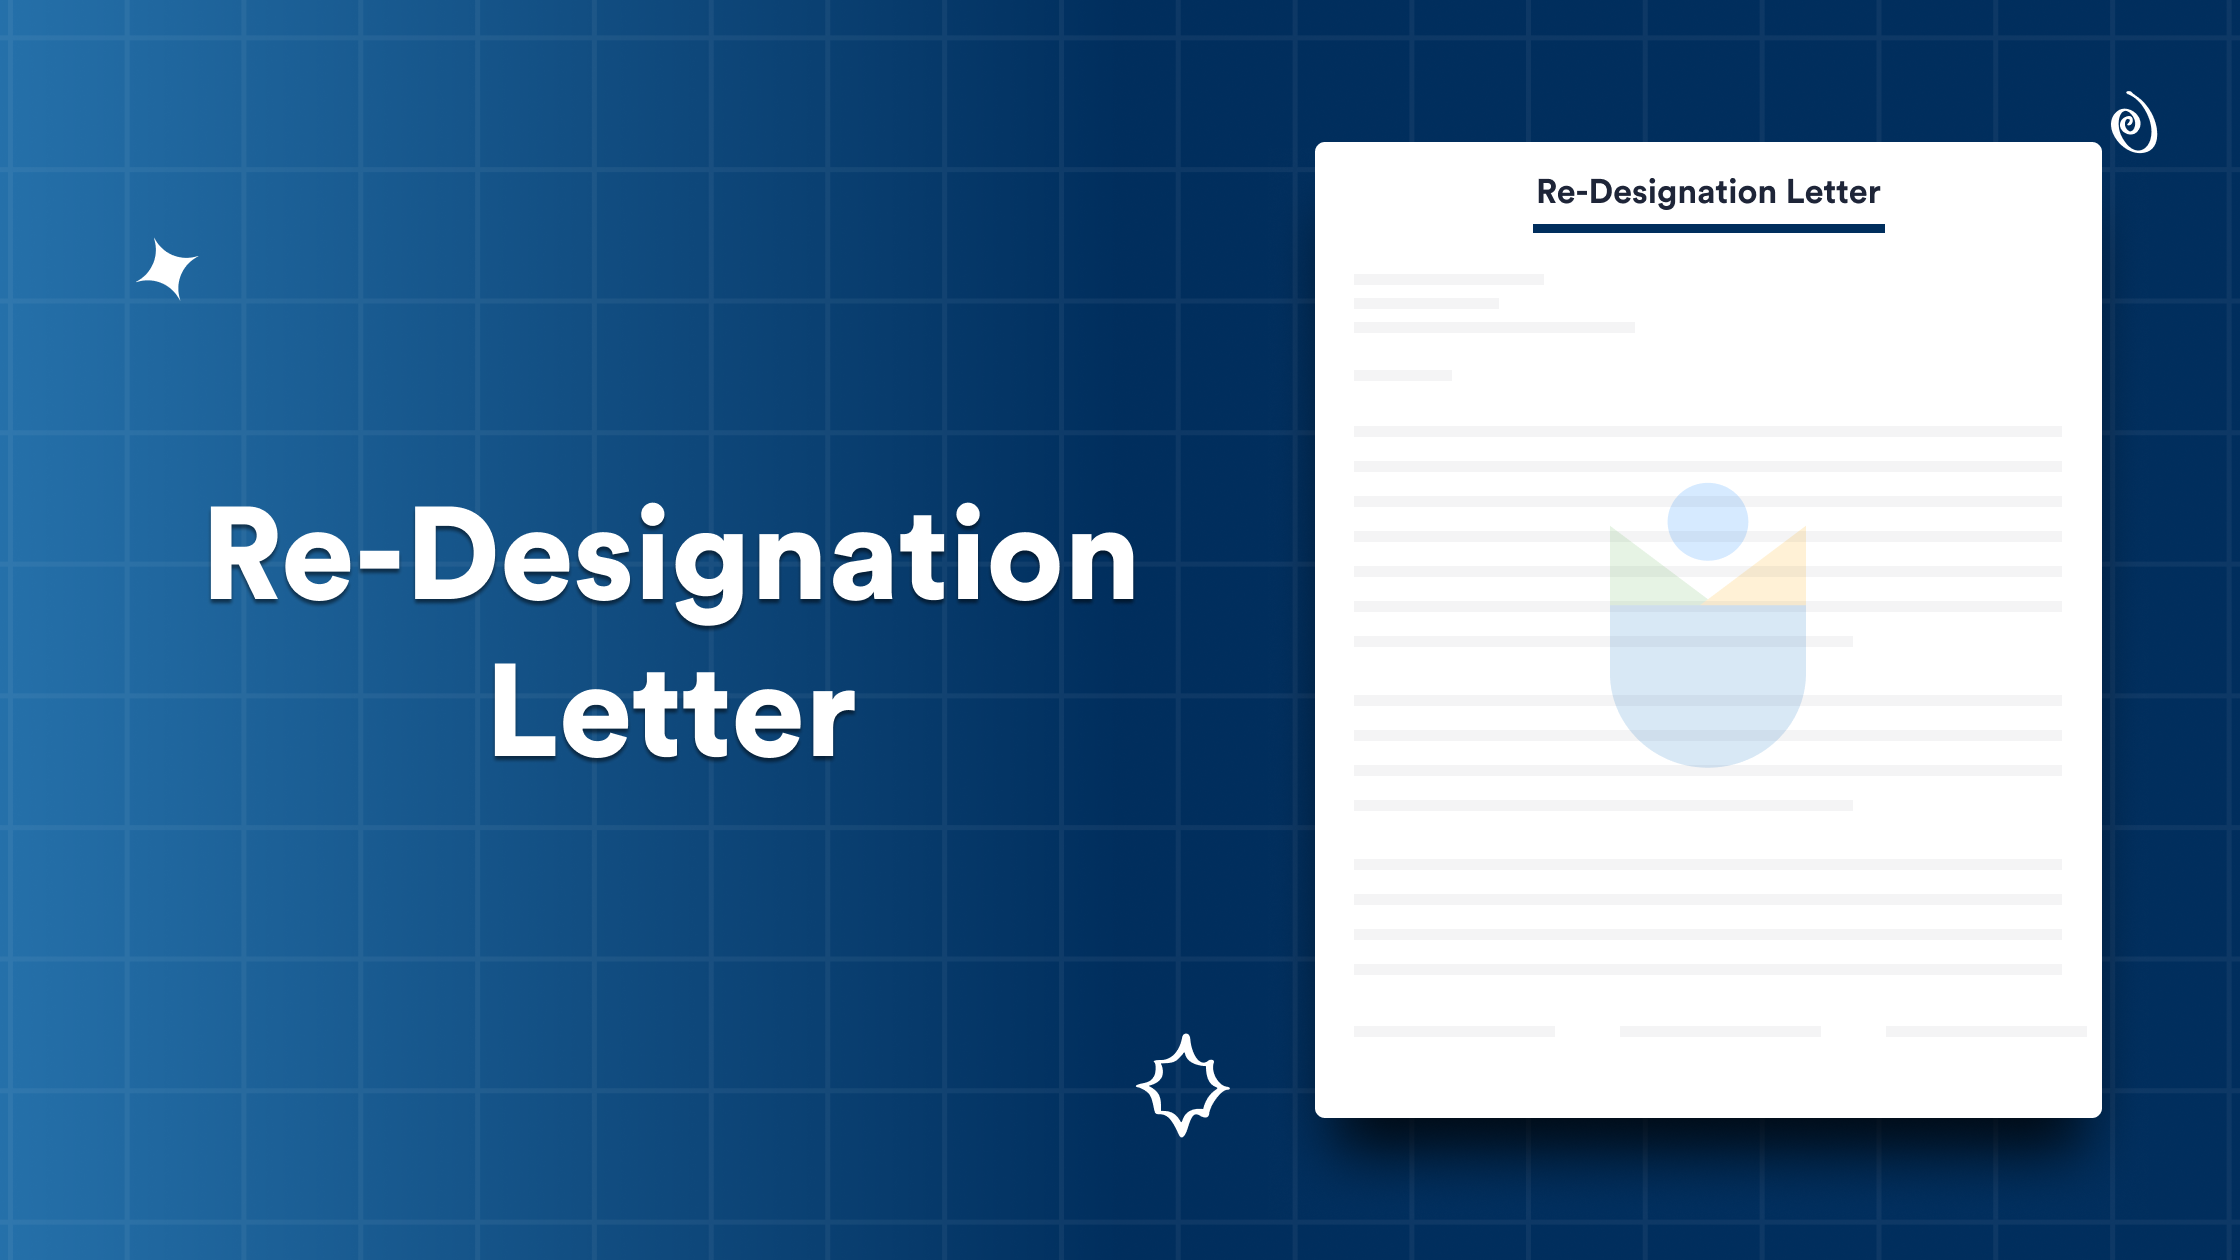 Re-Designation Letter